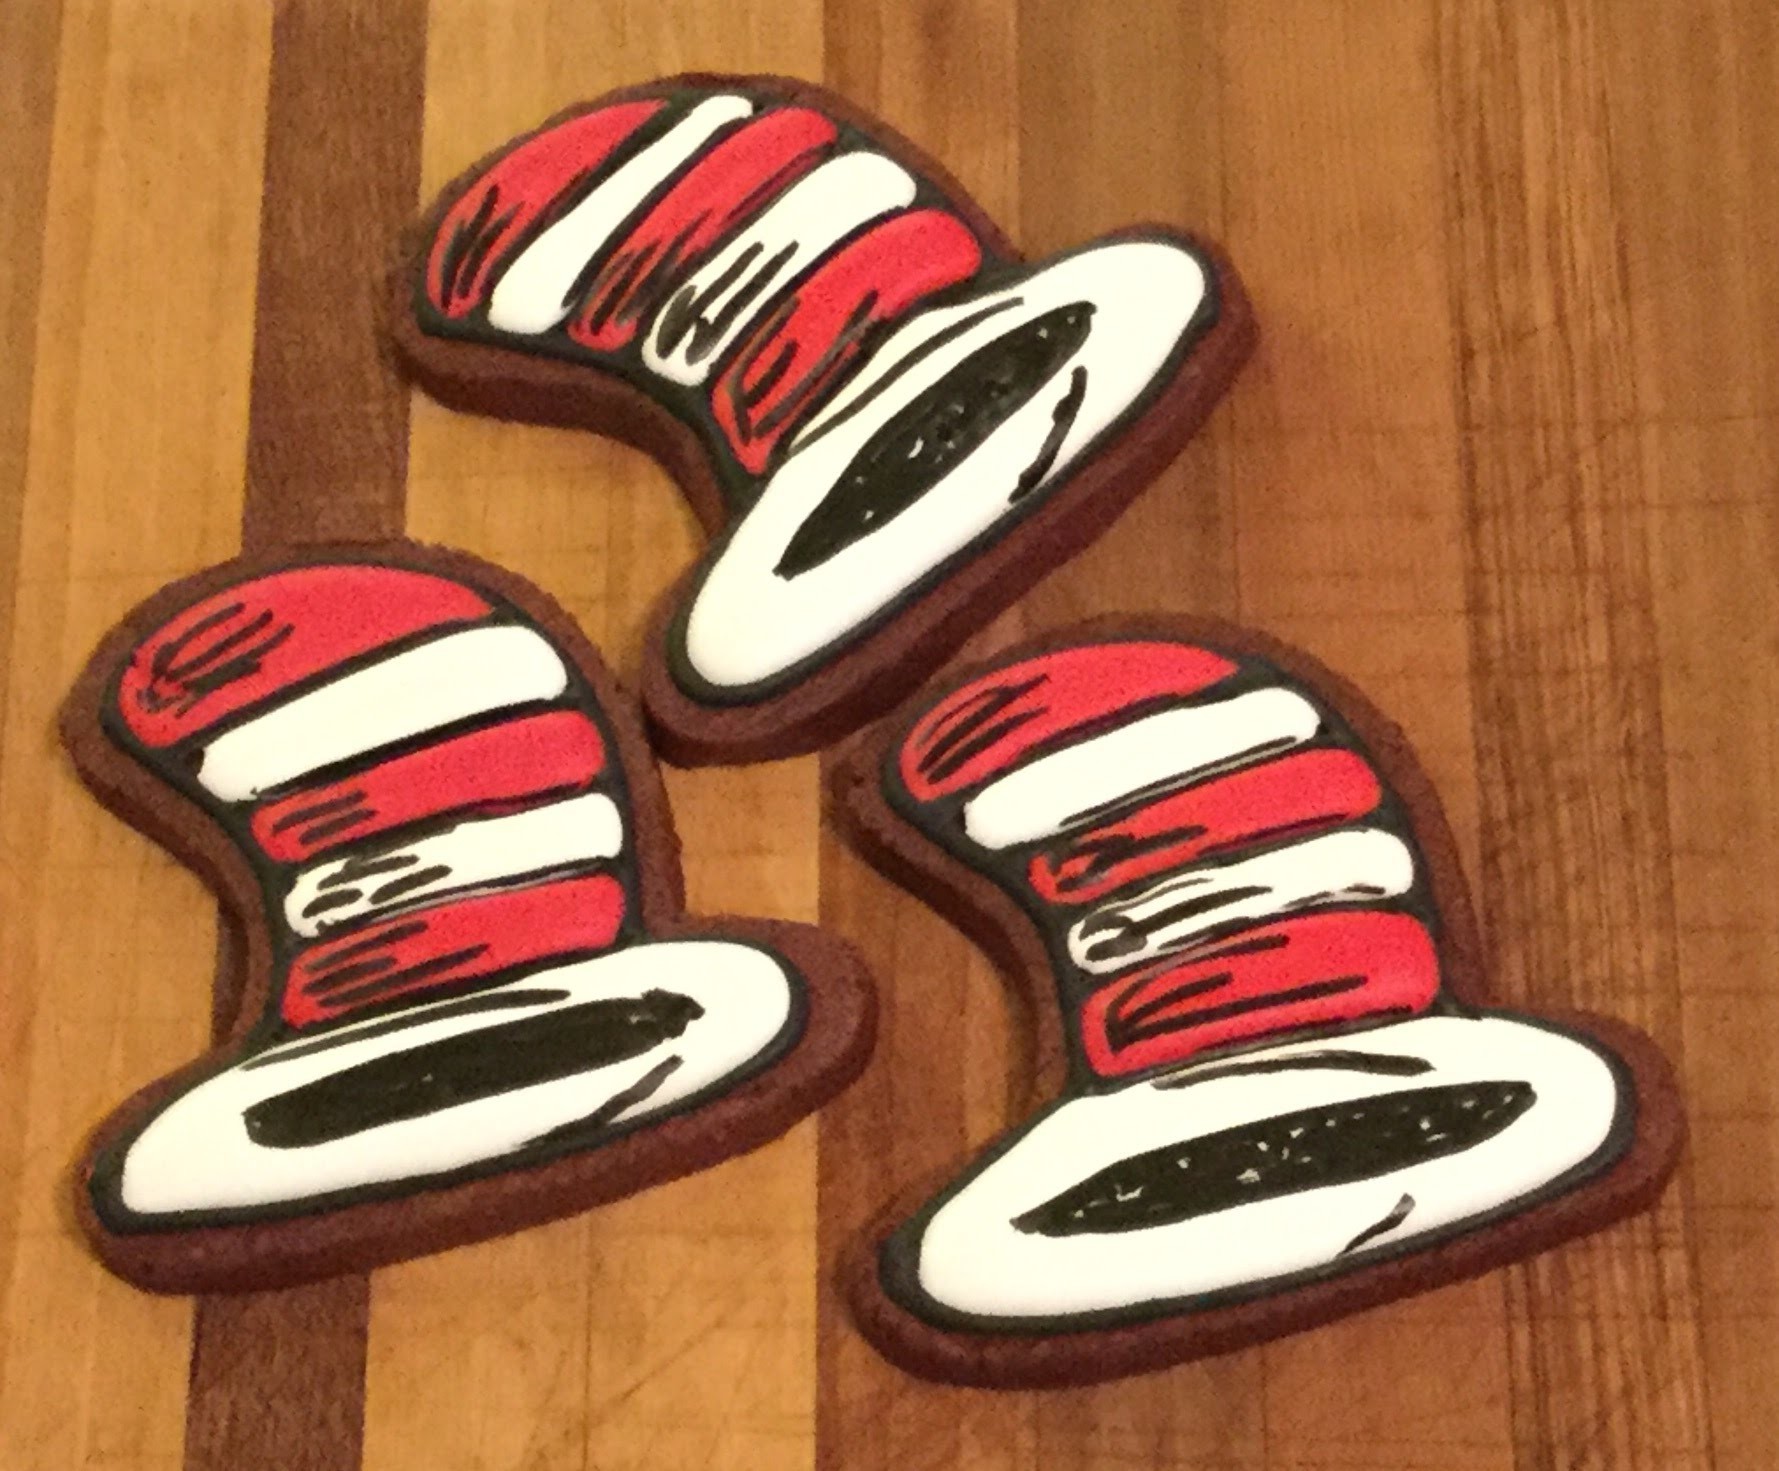 How to make Dr Seuss chocolate sugar cookies!